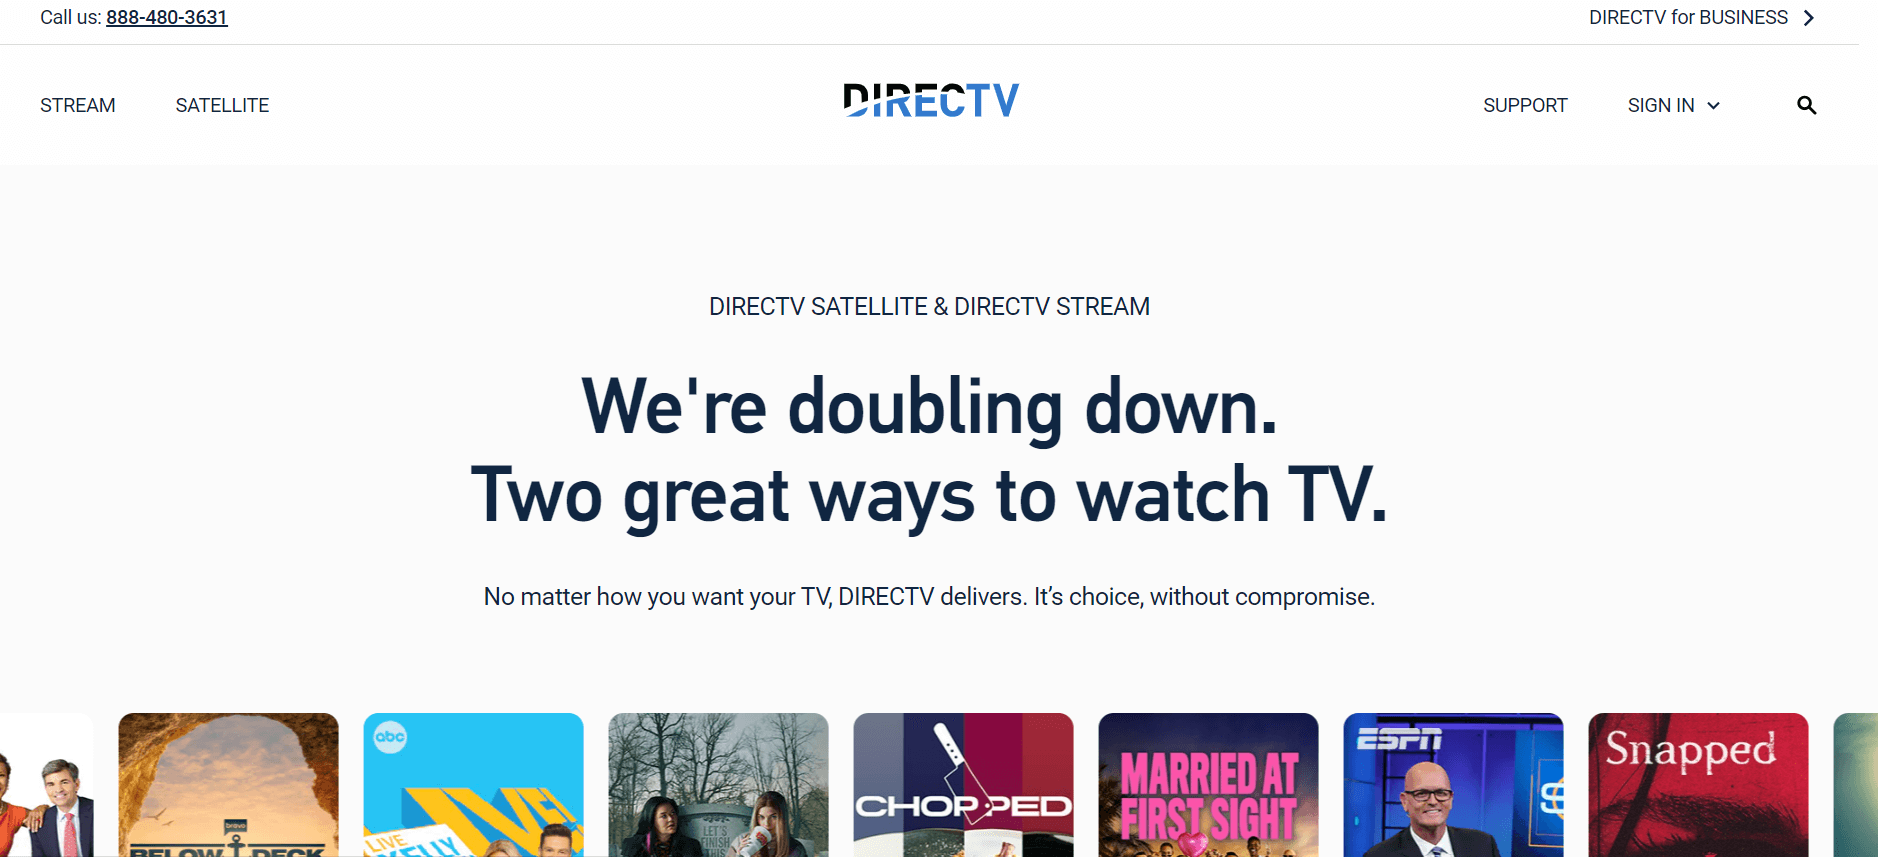 direcTV-website-in-India 